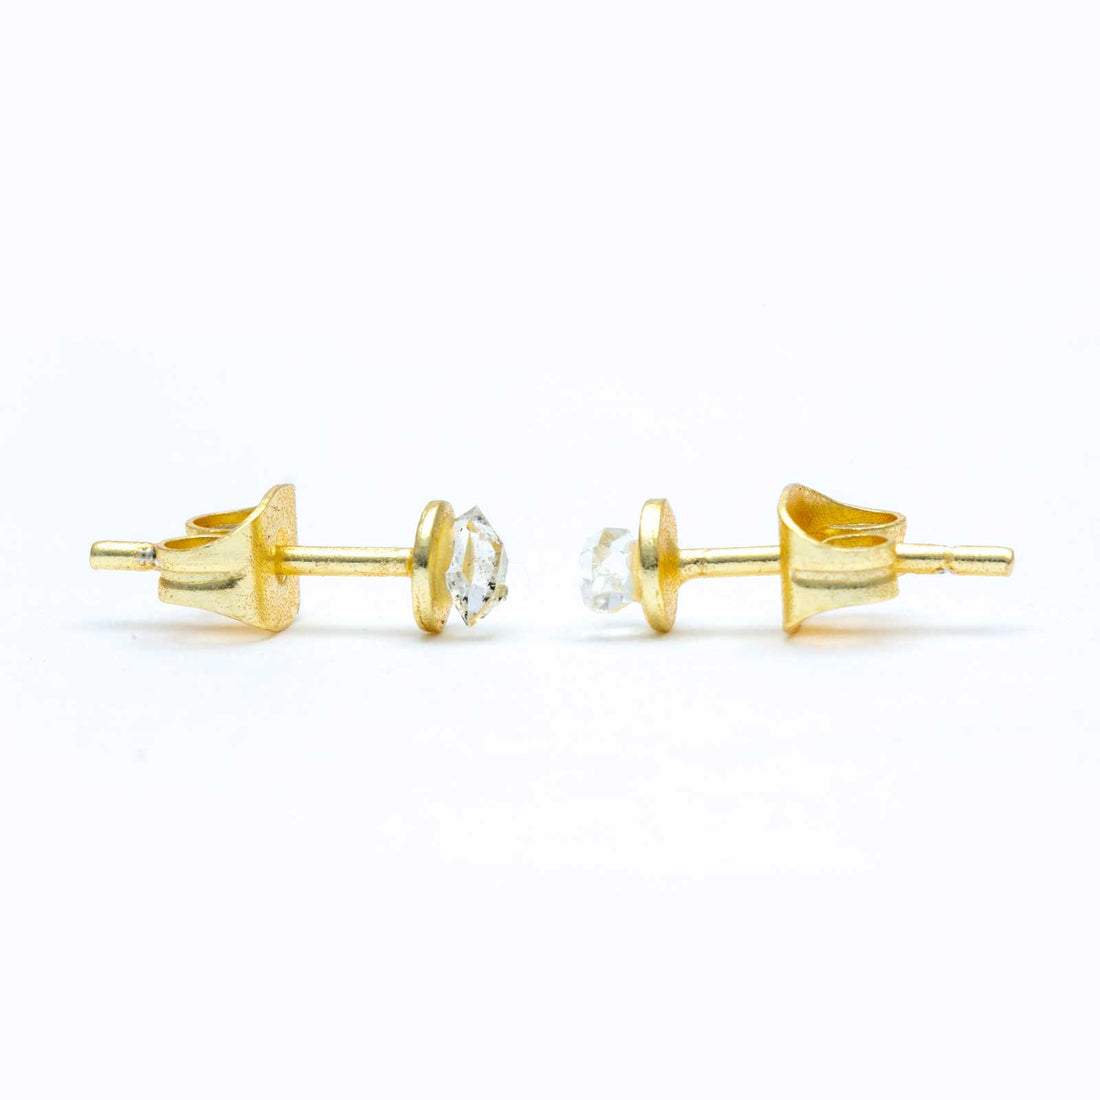 Herkimer Diamond Solitaire Stud Earrings Gold Plated Earring - rockflowerpaper